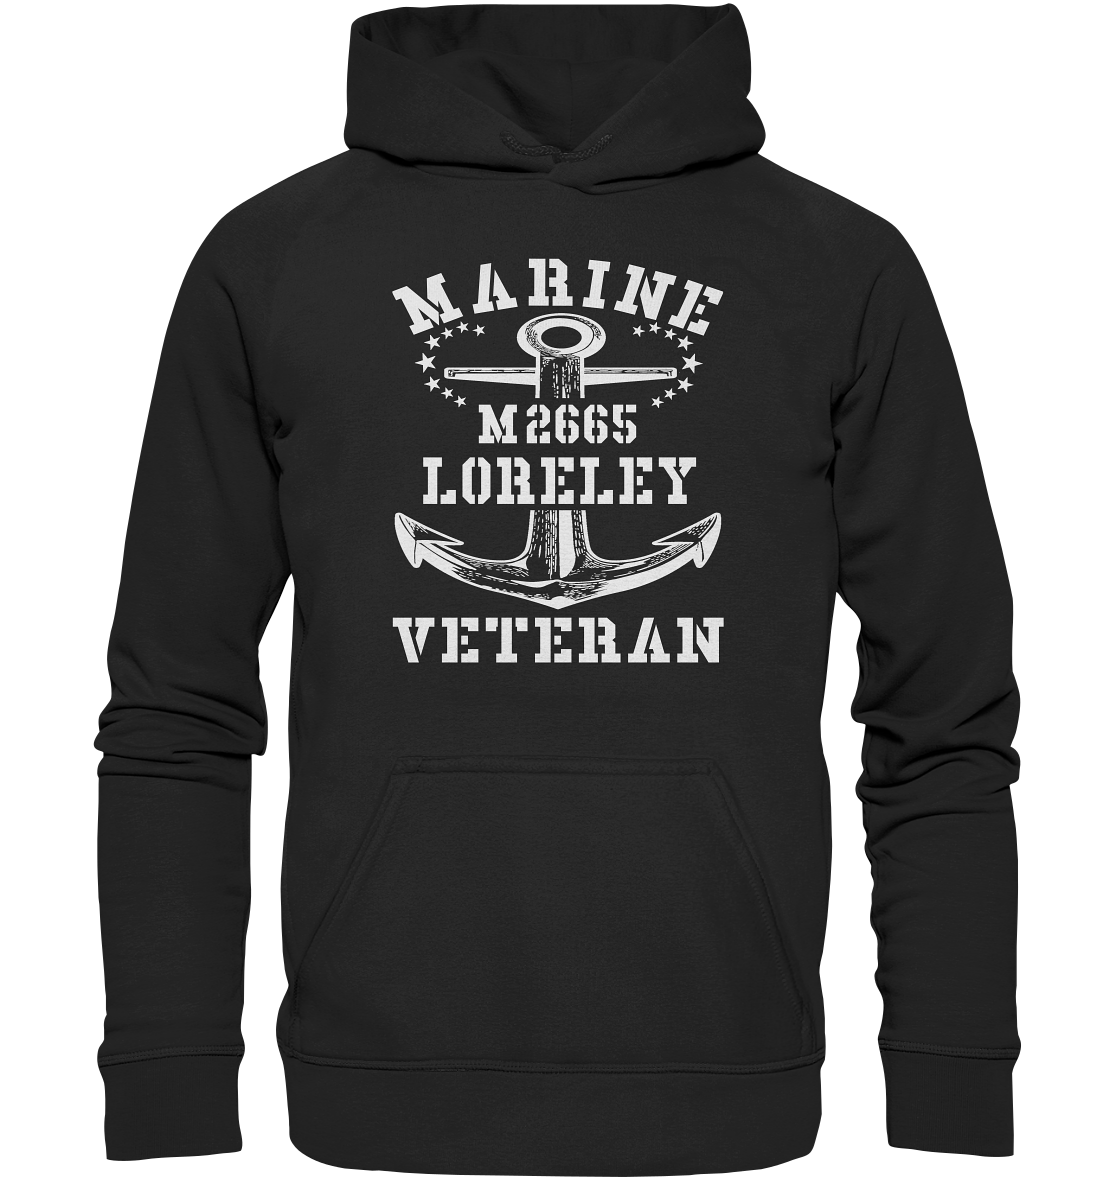 BiMi M2665 LORELEY Marine Veteran - Basic Unisex Hoodie XL